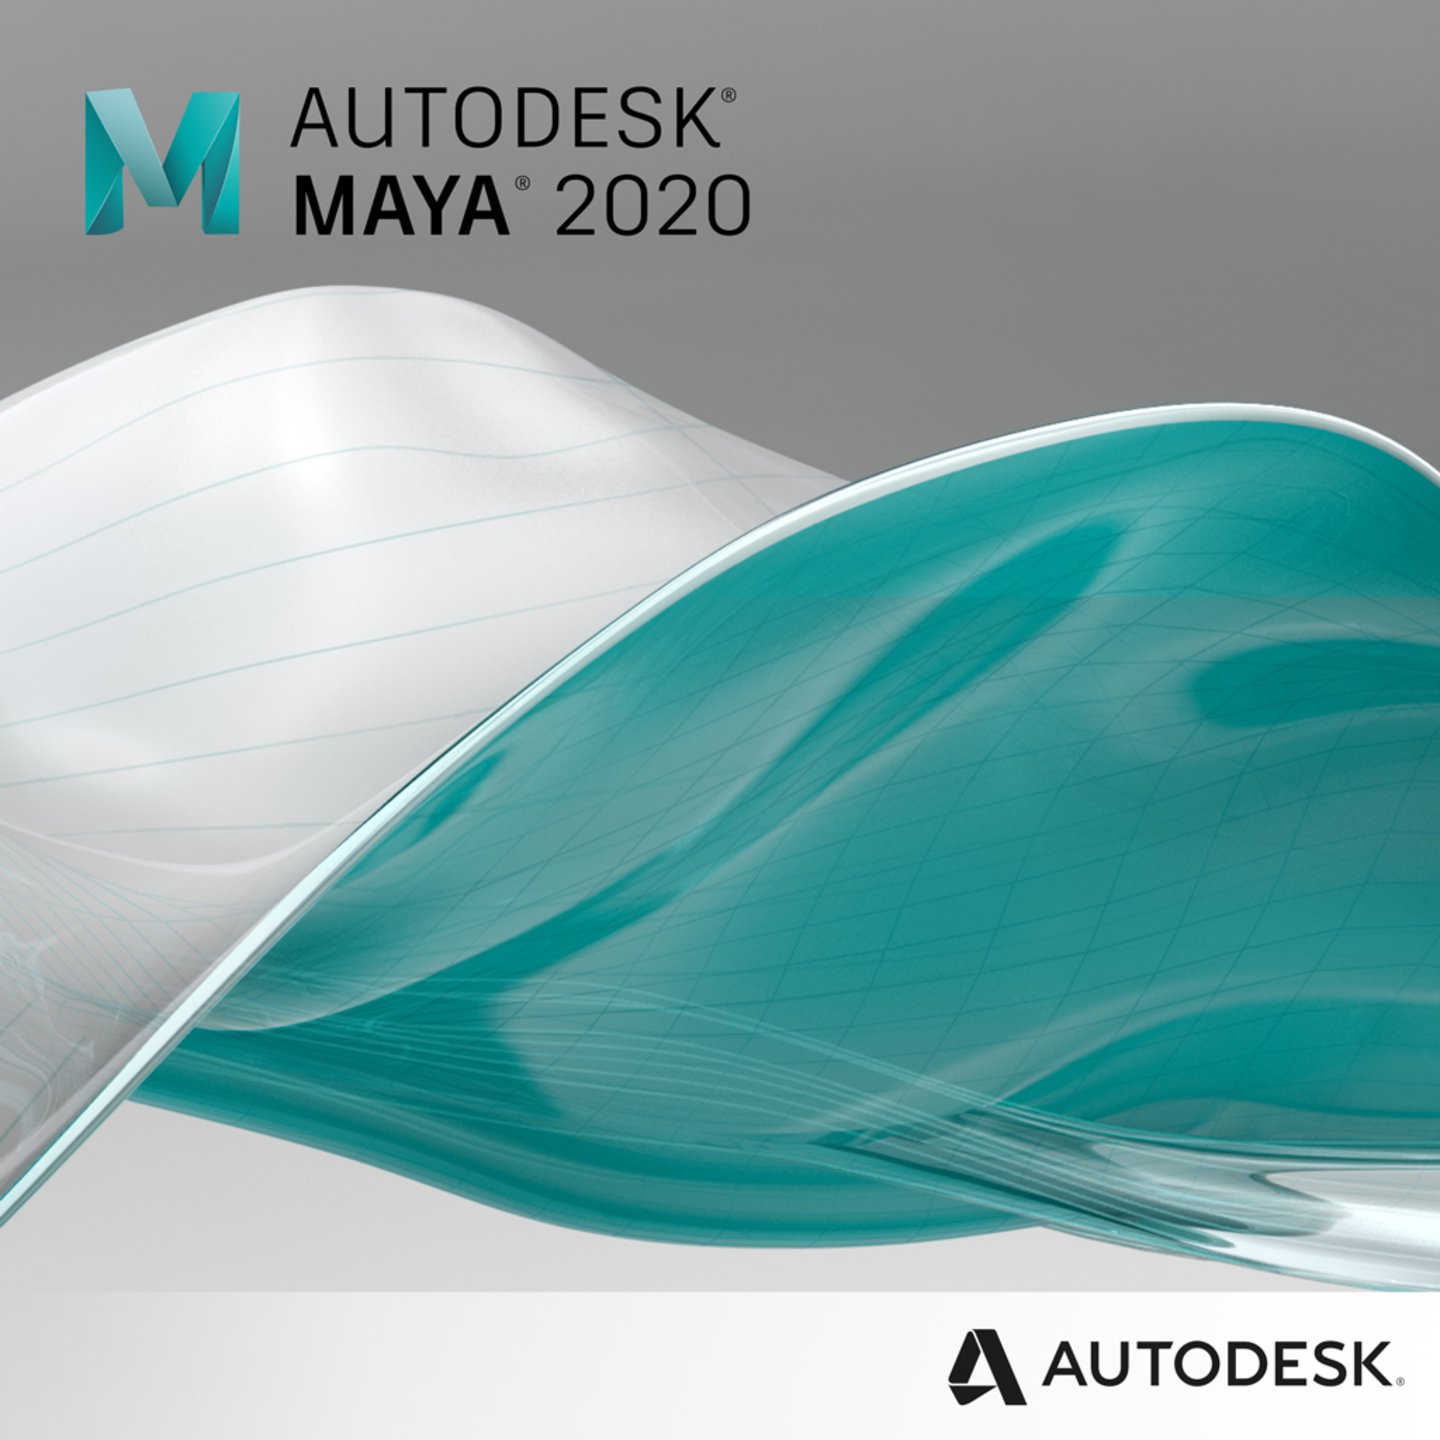 Autodesk MAYA 2020